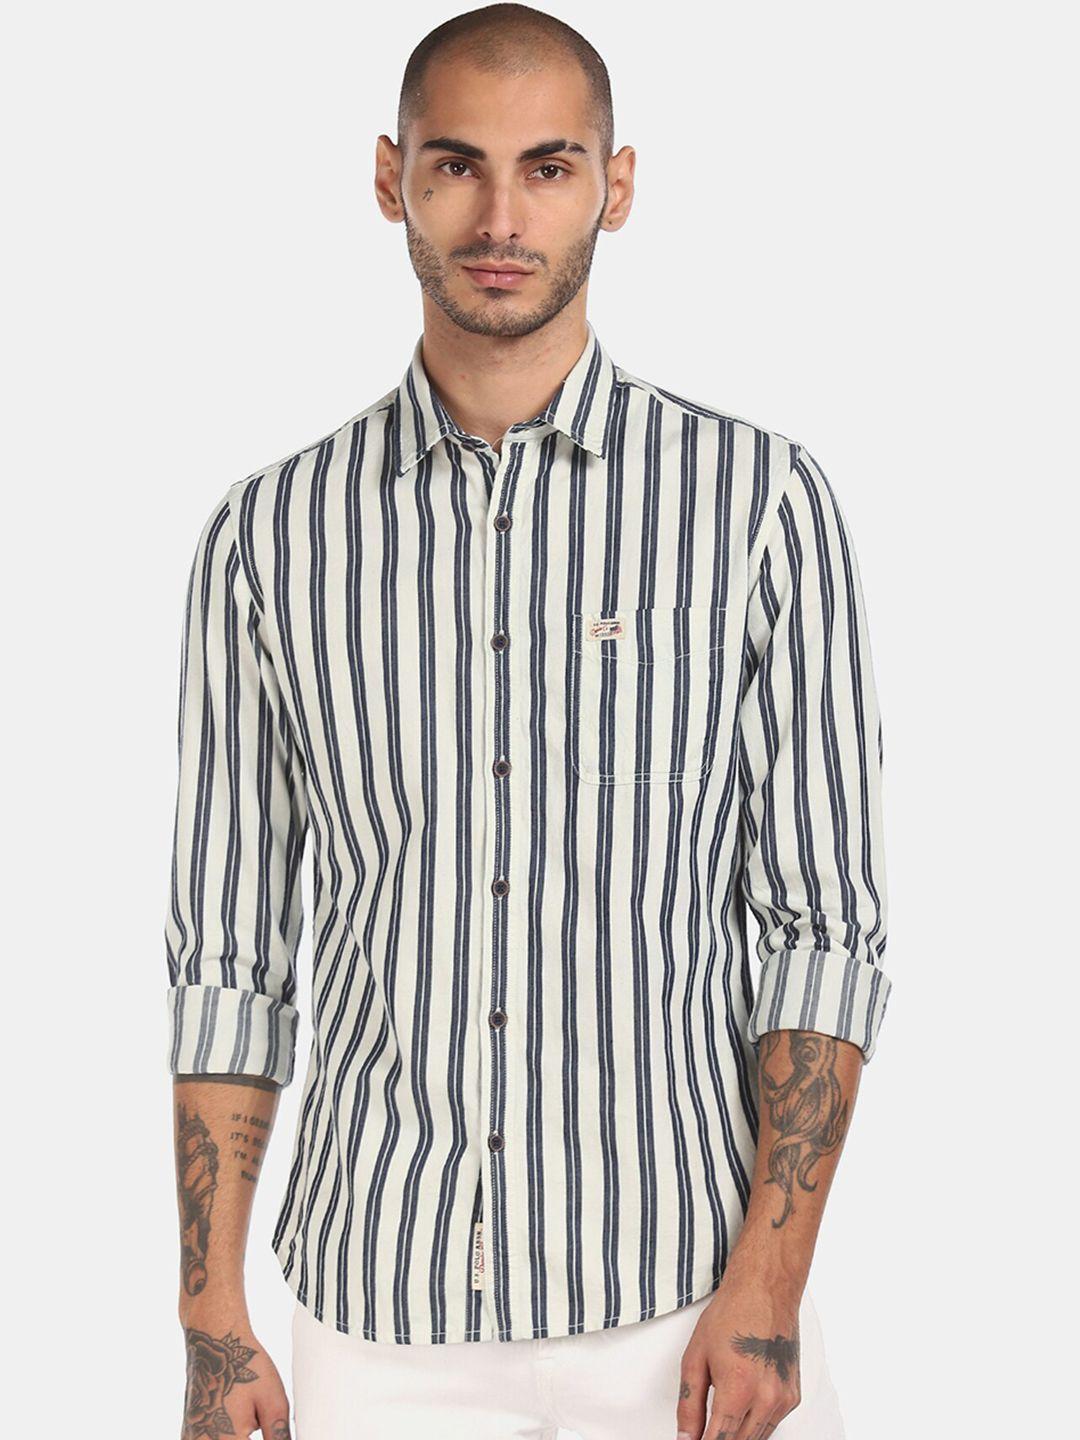 u.s. polo assn. denim co. men navy blue & off-white striped cotton casual shirt